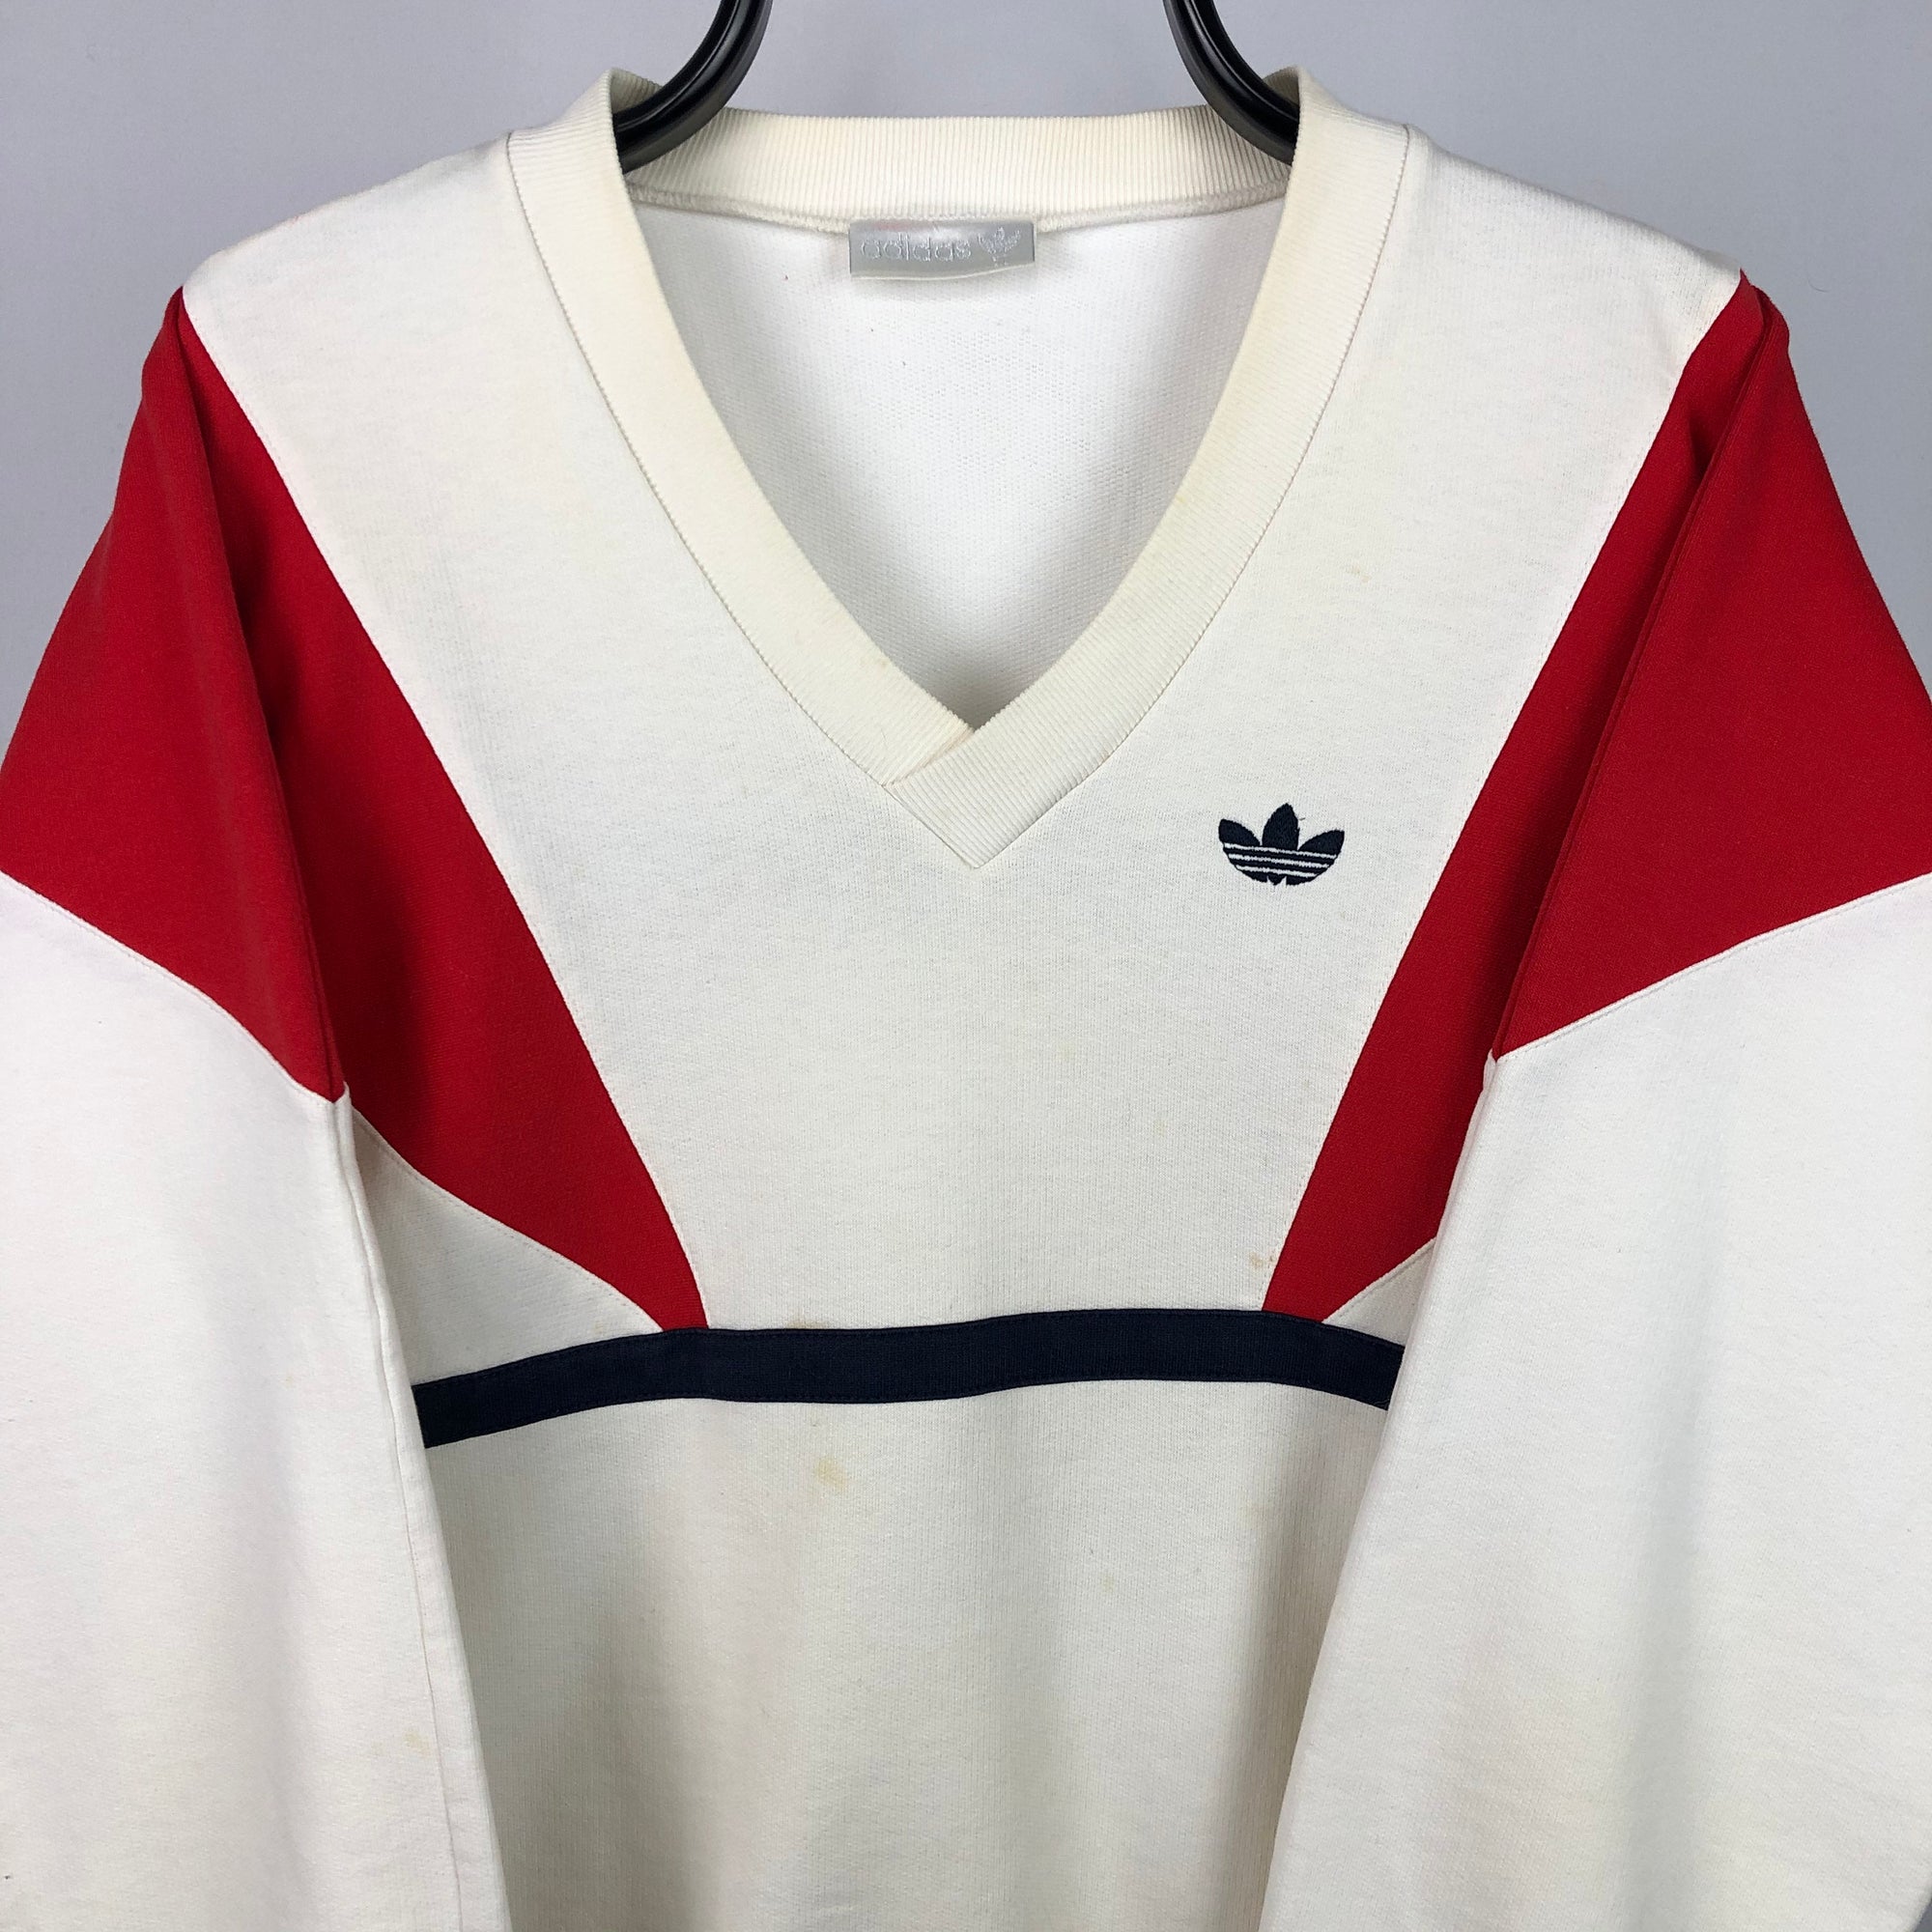 Vintage 80s Adidas Sweatshirt in Cream/Red/Navy - Men's Medium/Women's Large